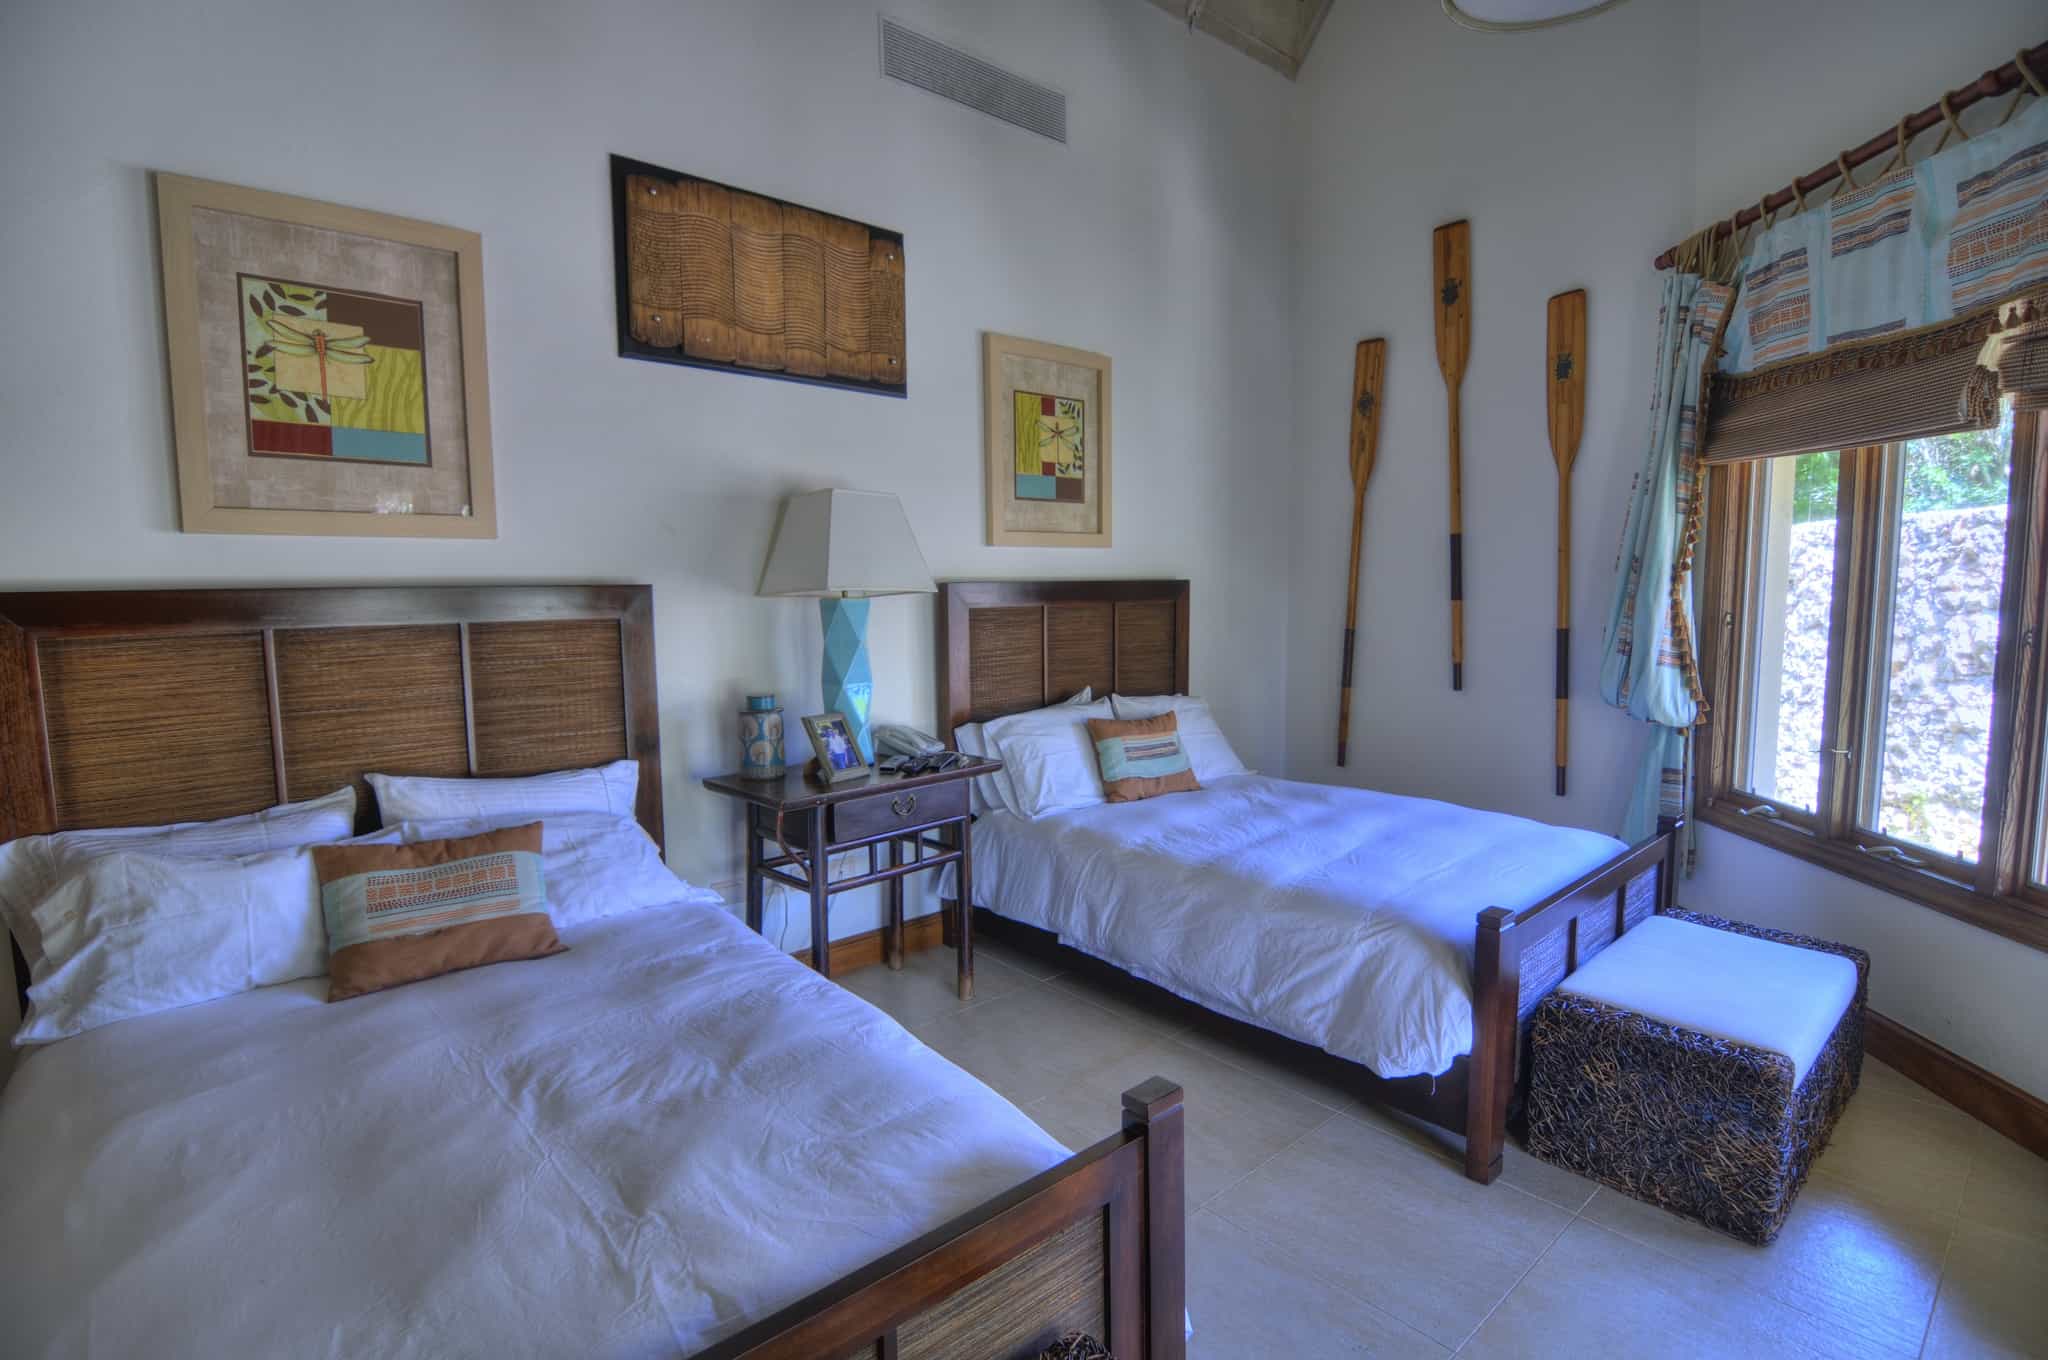 Breathless Luxury Villa in Cap Cana